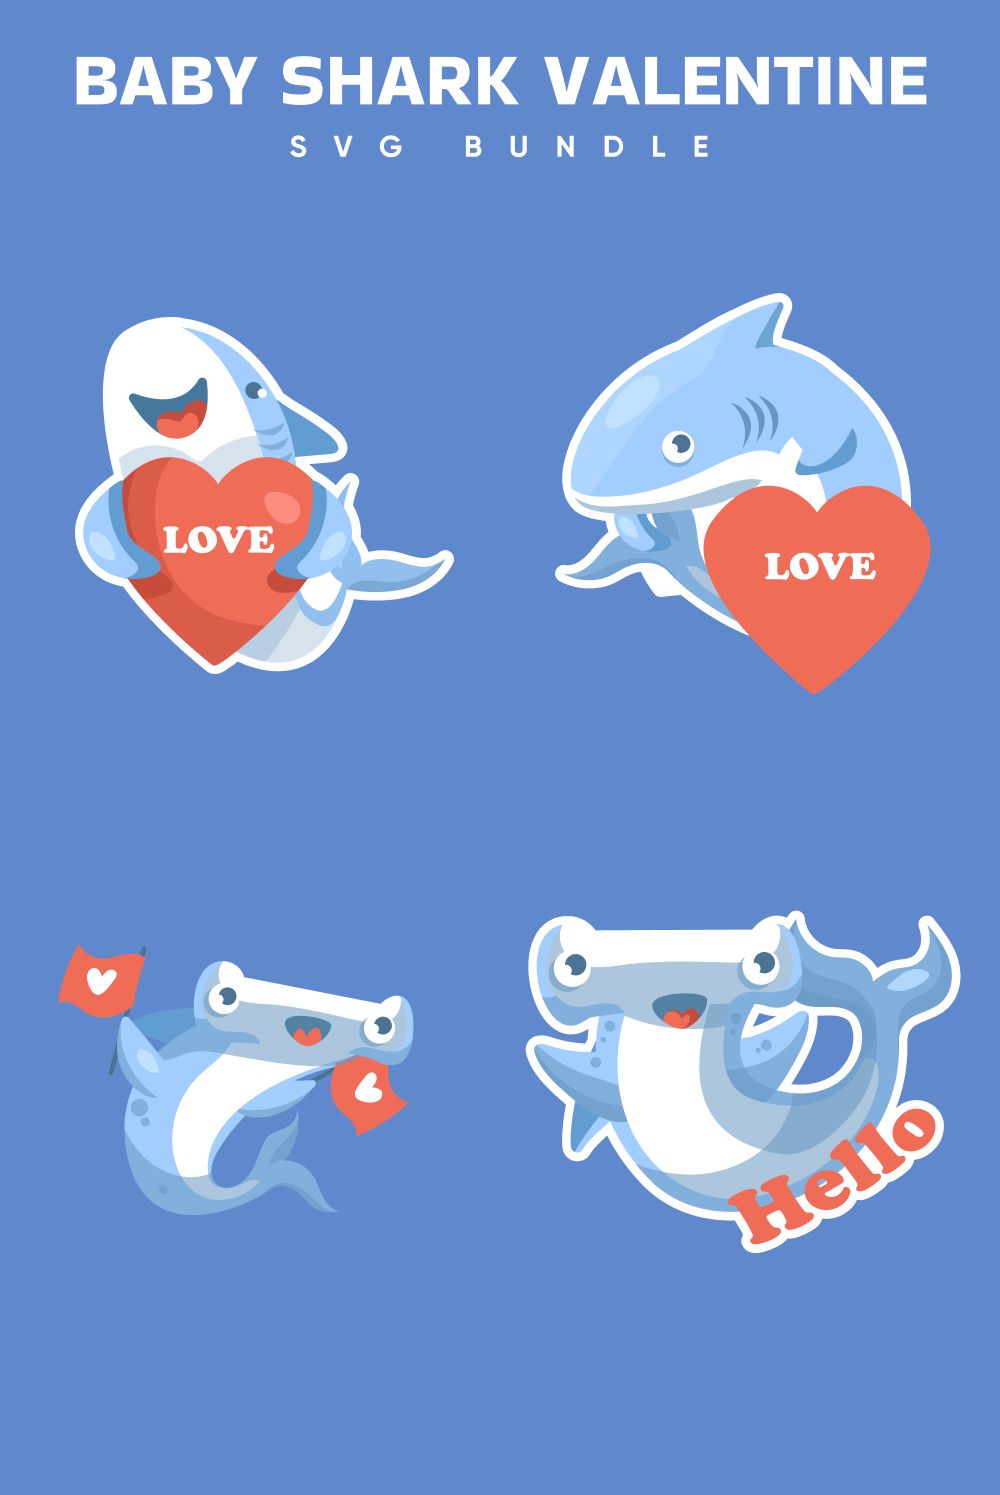 Baby shark valentine stickers on a blue background.